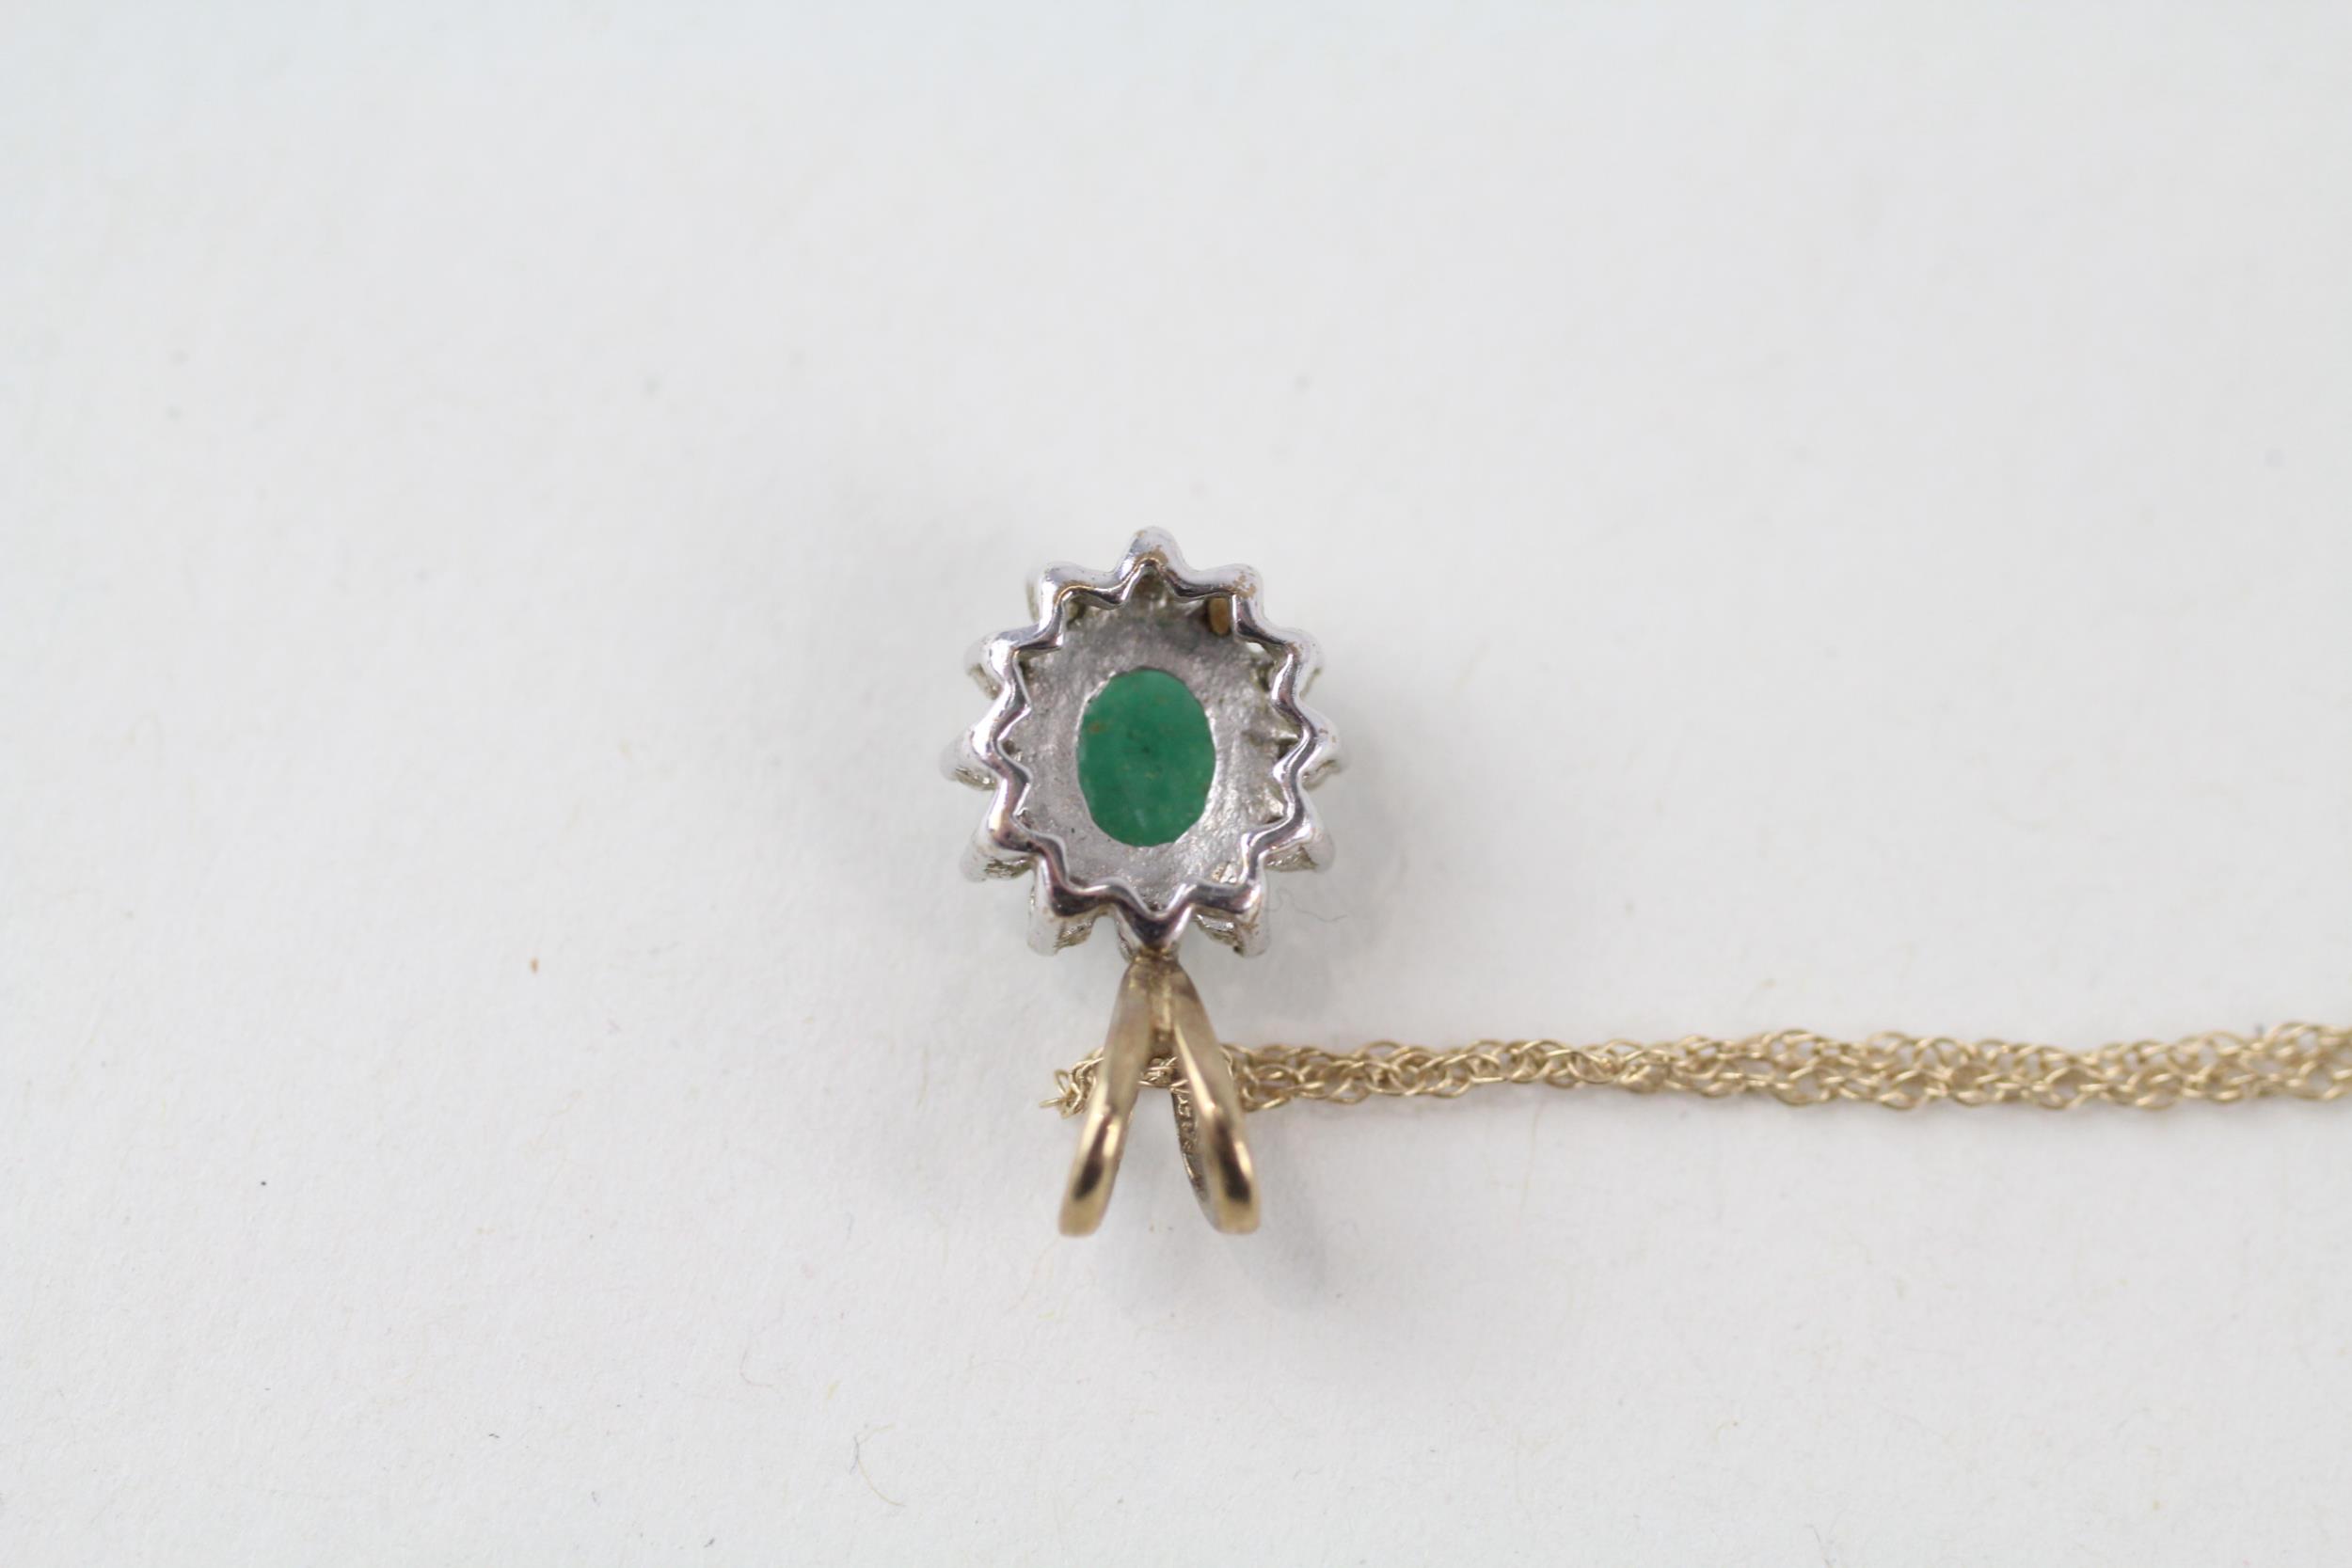 9ct gold emerald & diamond cluster pendant & chain (1.3g) - Image 4 of 4